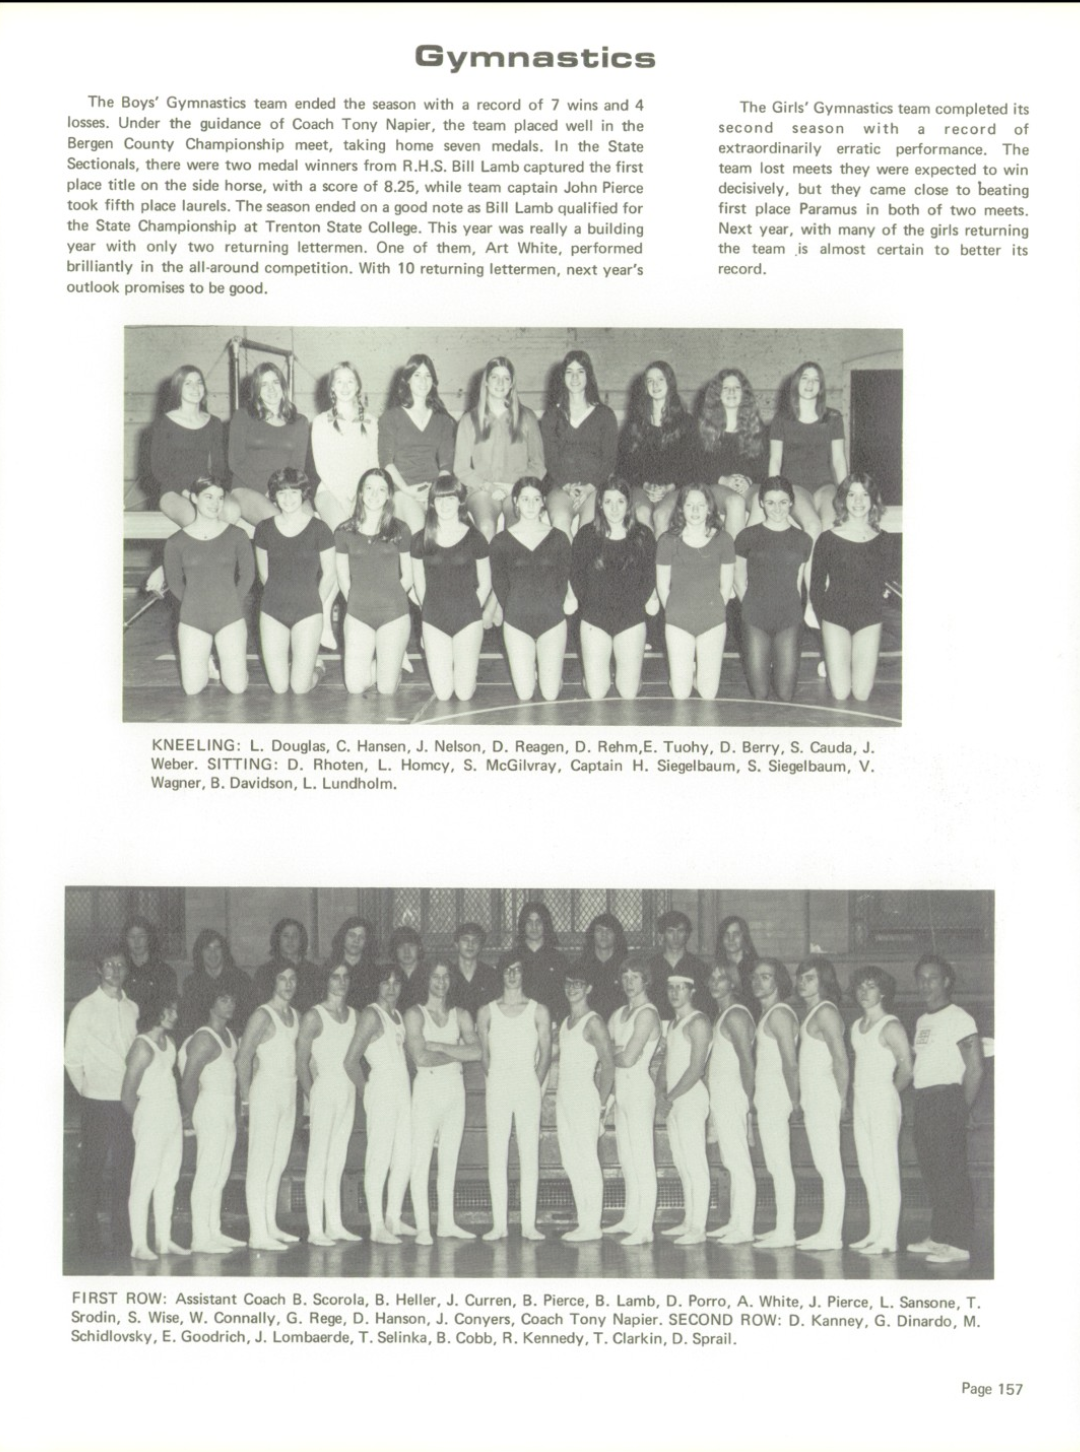 1973 Girls’ Gymnastics Team